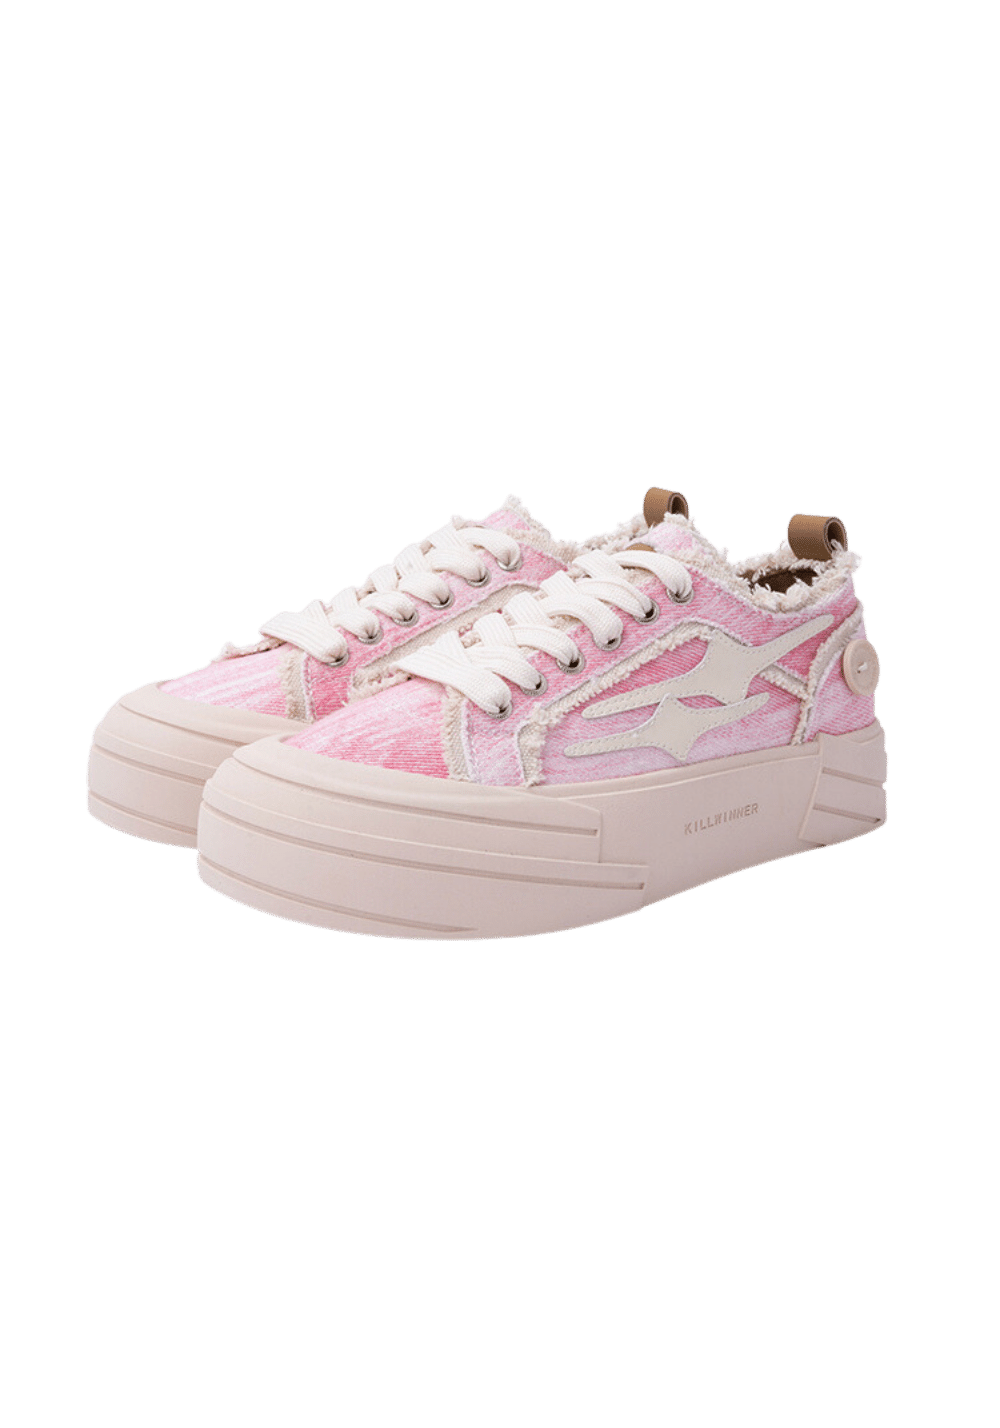 Flower Pink Canvas Shoes - PSYLOS 1, Flower Pink Canvas Shoes, Shoes, KILLWINNER, PSYLOS 1